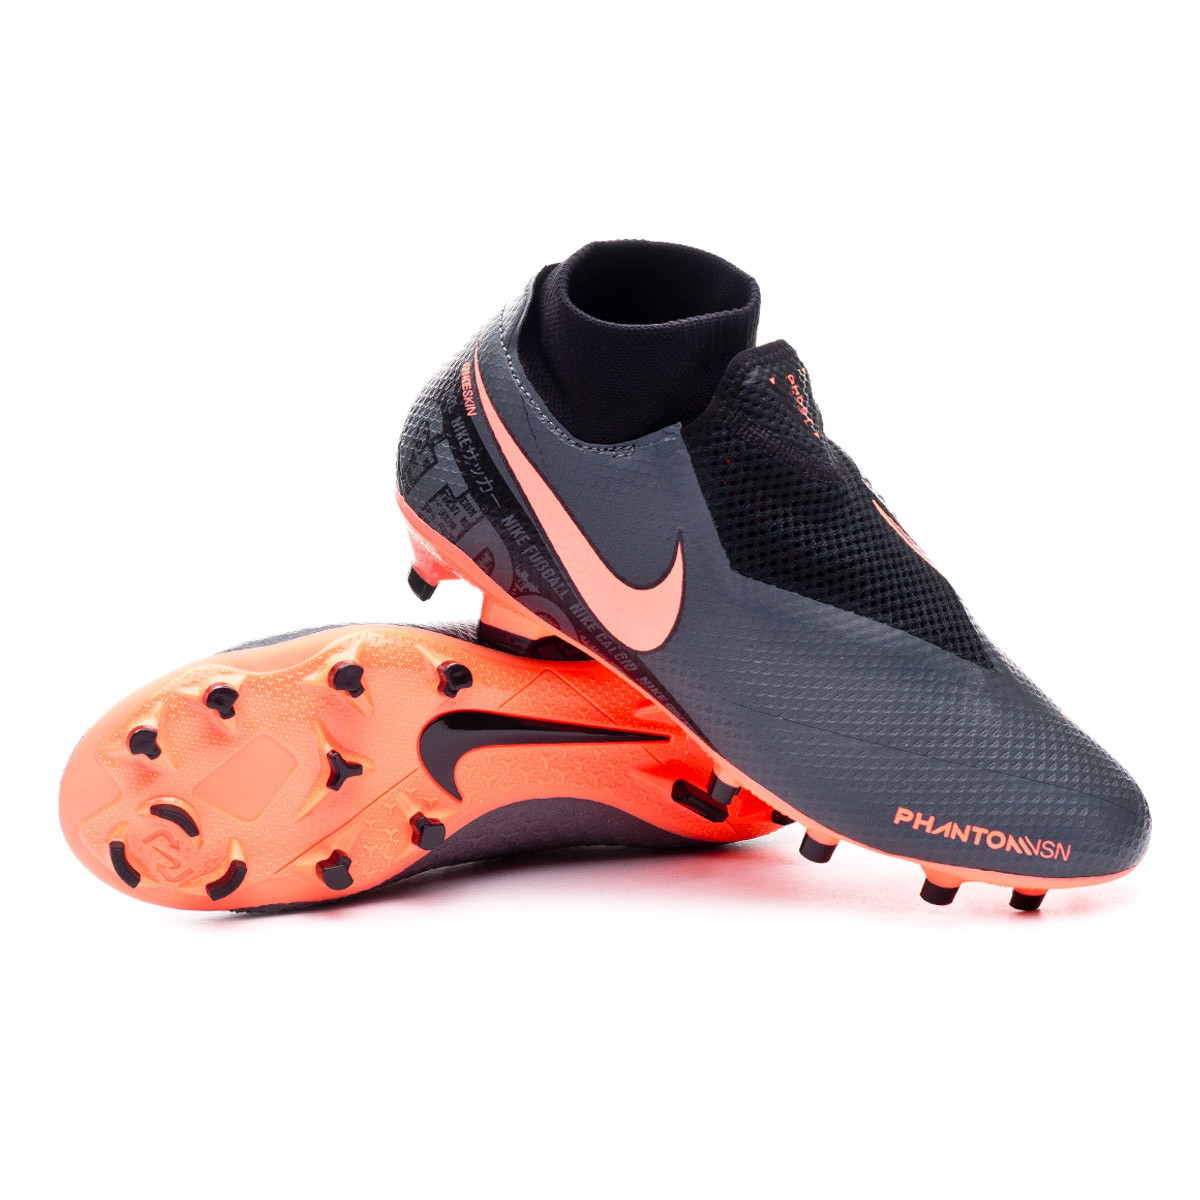 Football Boots Nike Phantom Vision Pro DF FG Dark grey-Bright mango-Black -  Football store Fútbol Emotion